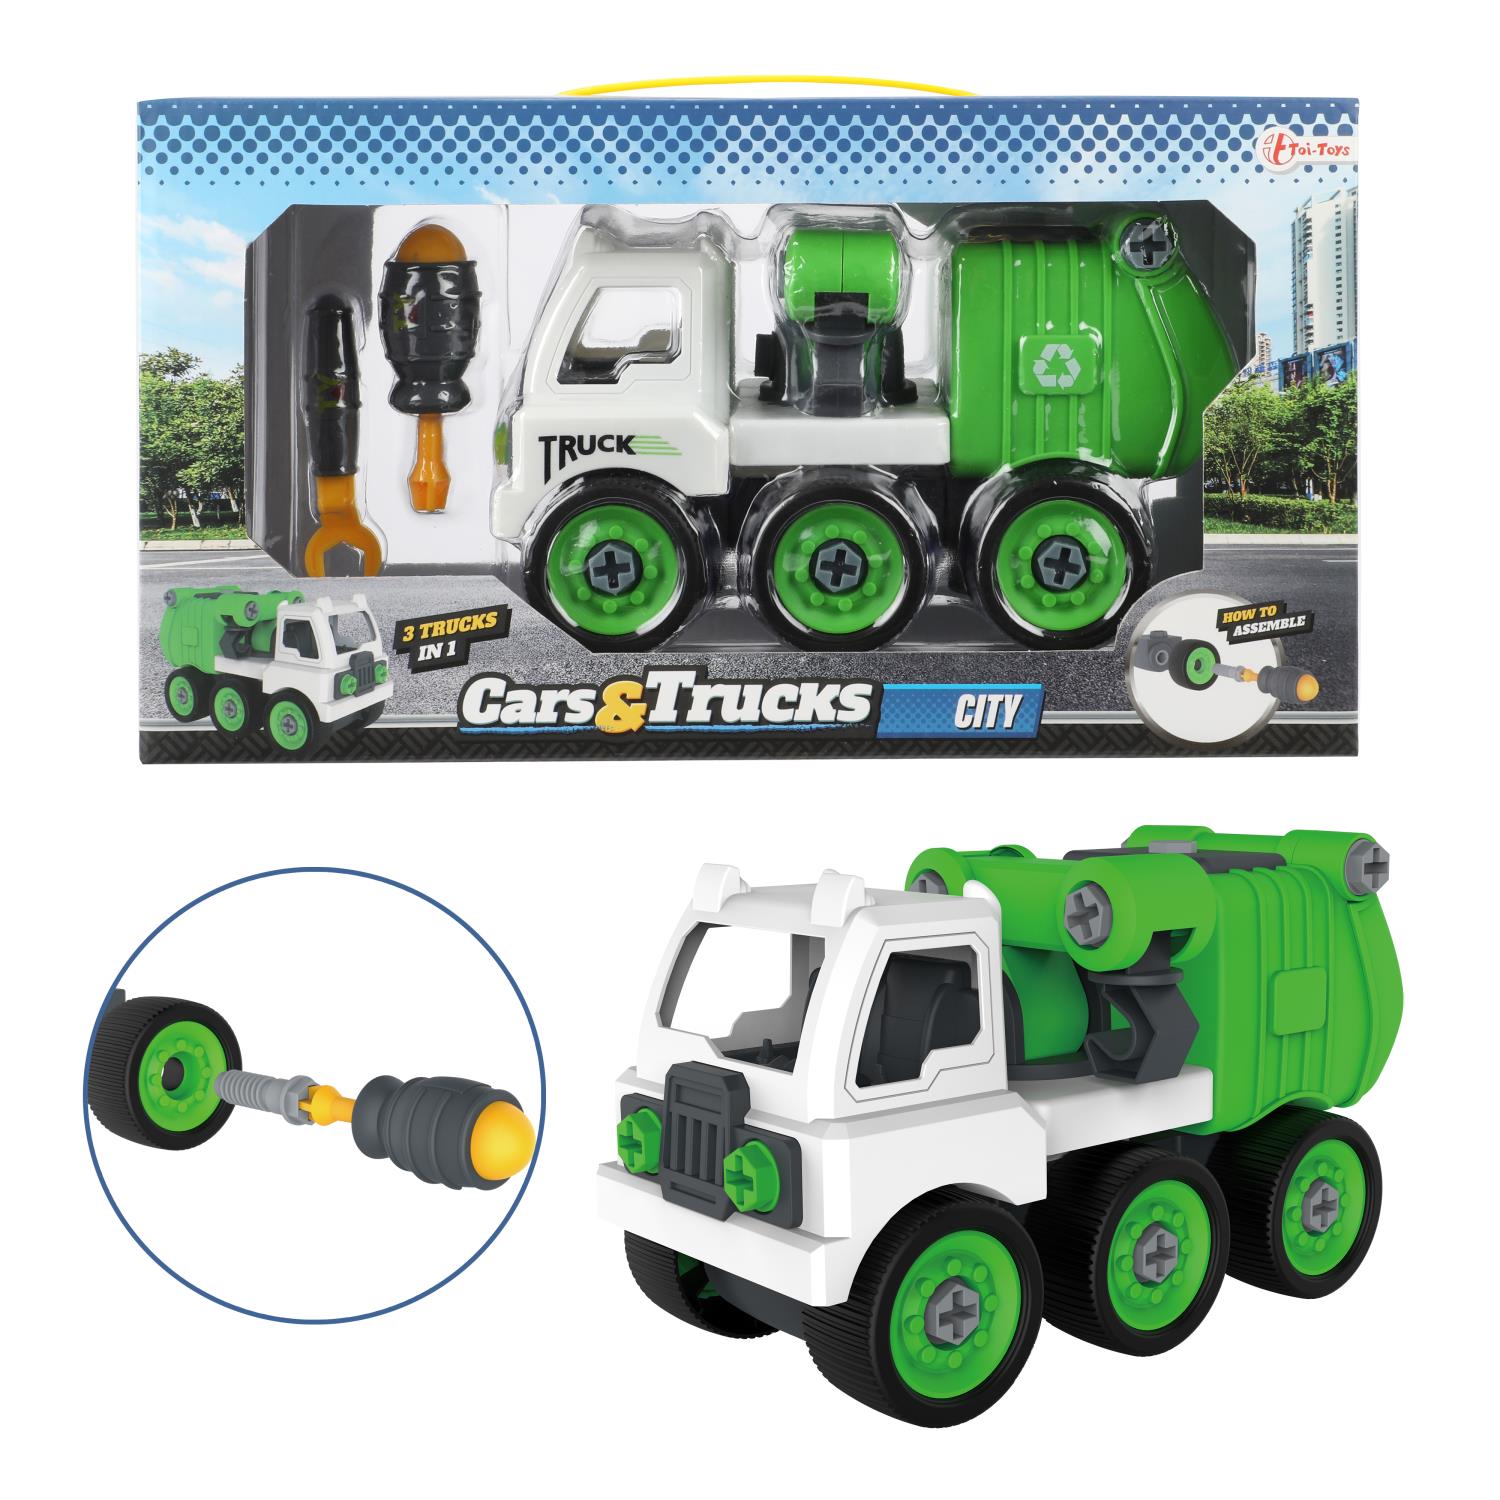 Cars&Trucks DIY Garbage Truck w/Screwdriwer & Key